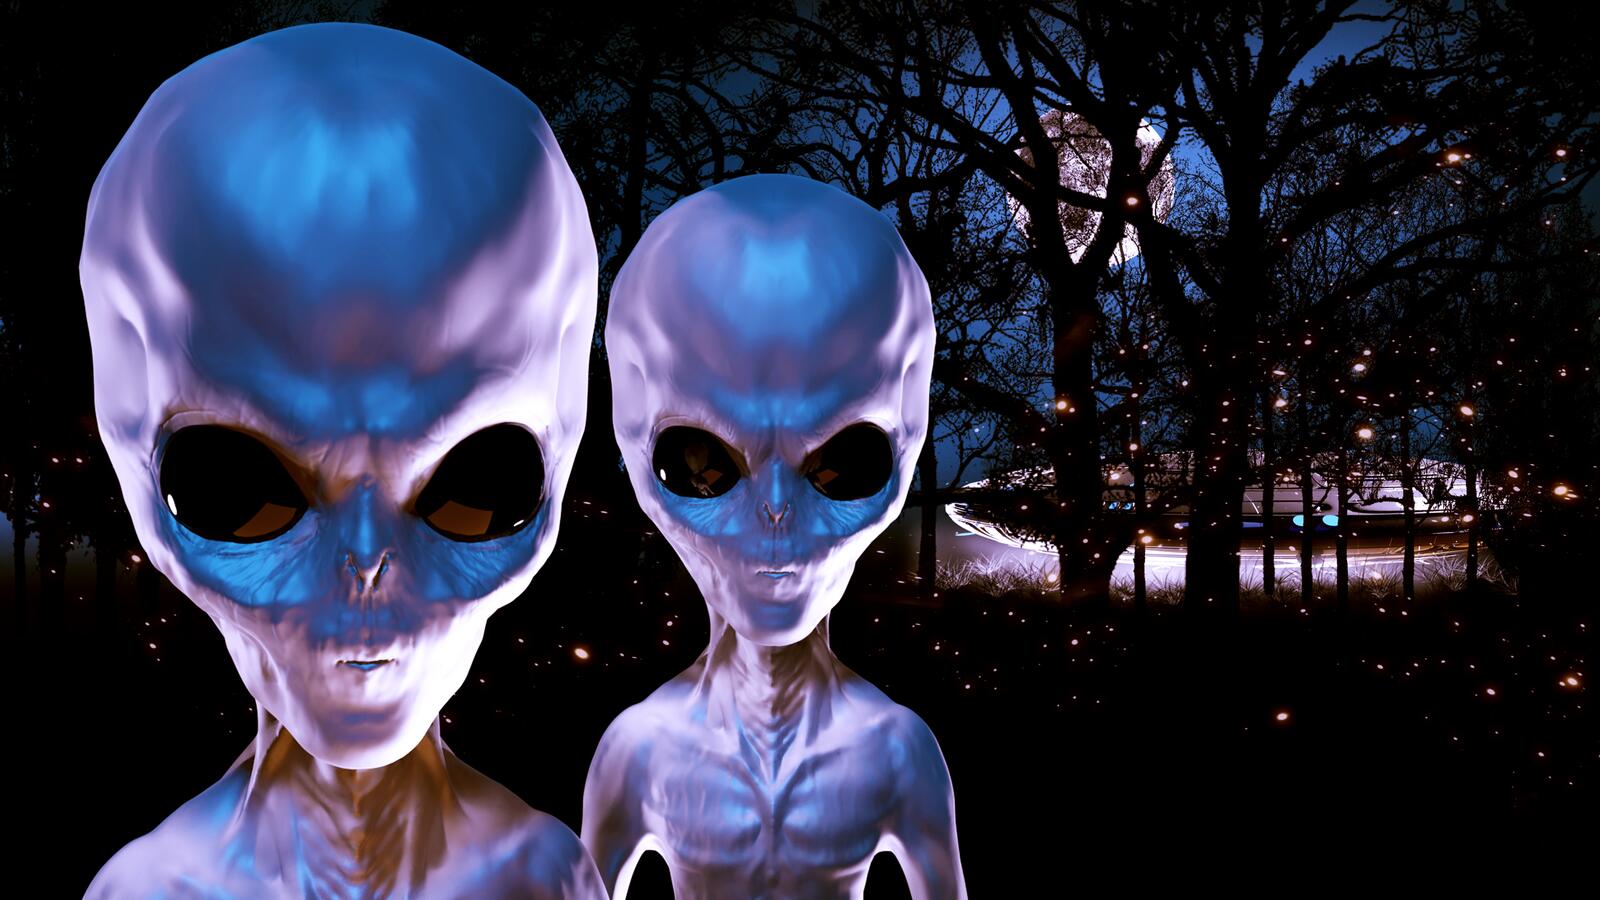 Wallpapers Aliens Humanoid UFO on the desktop